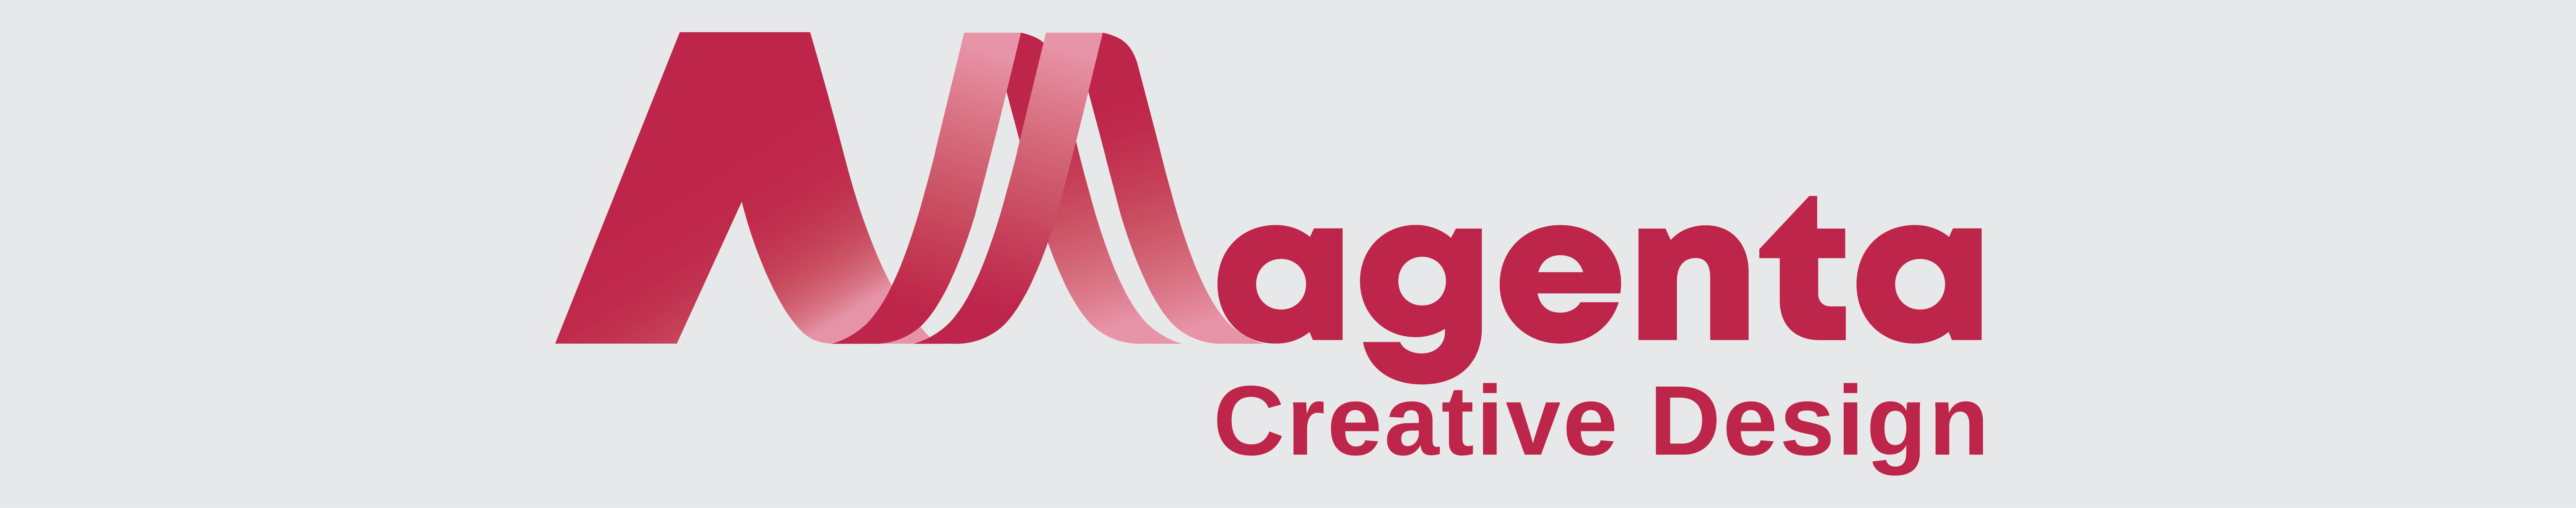 Magenta Creative Design's profile banner